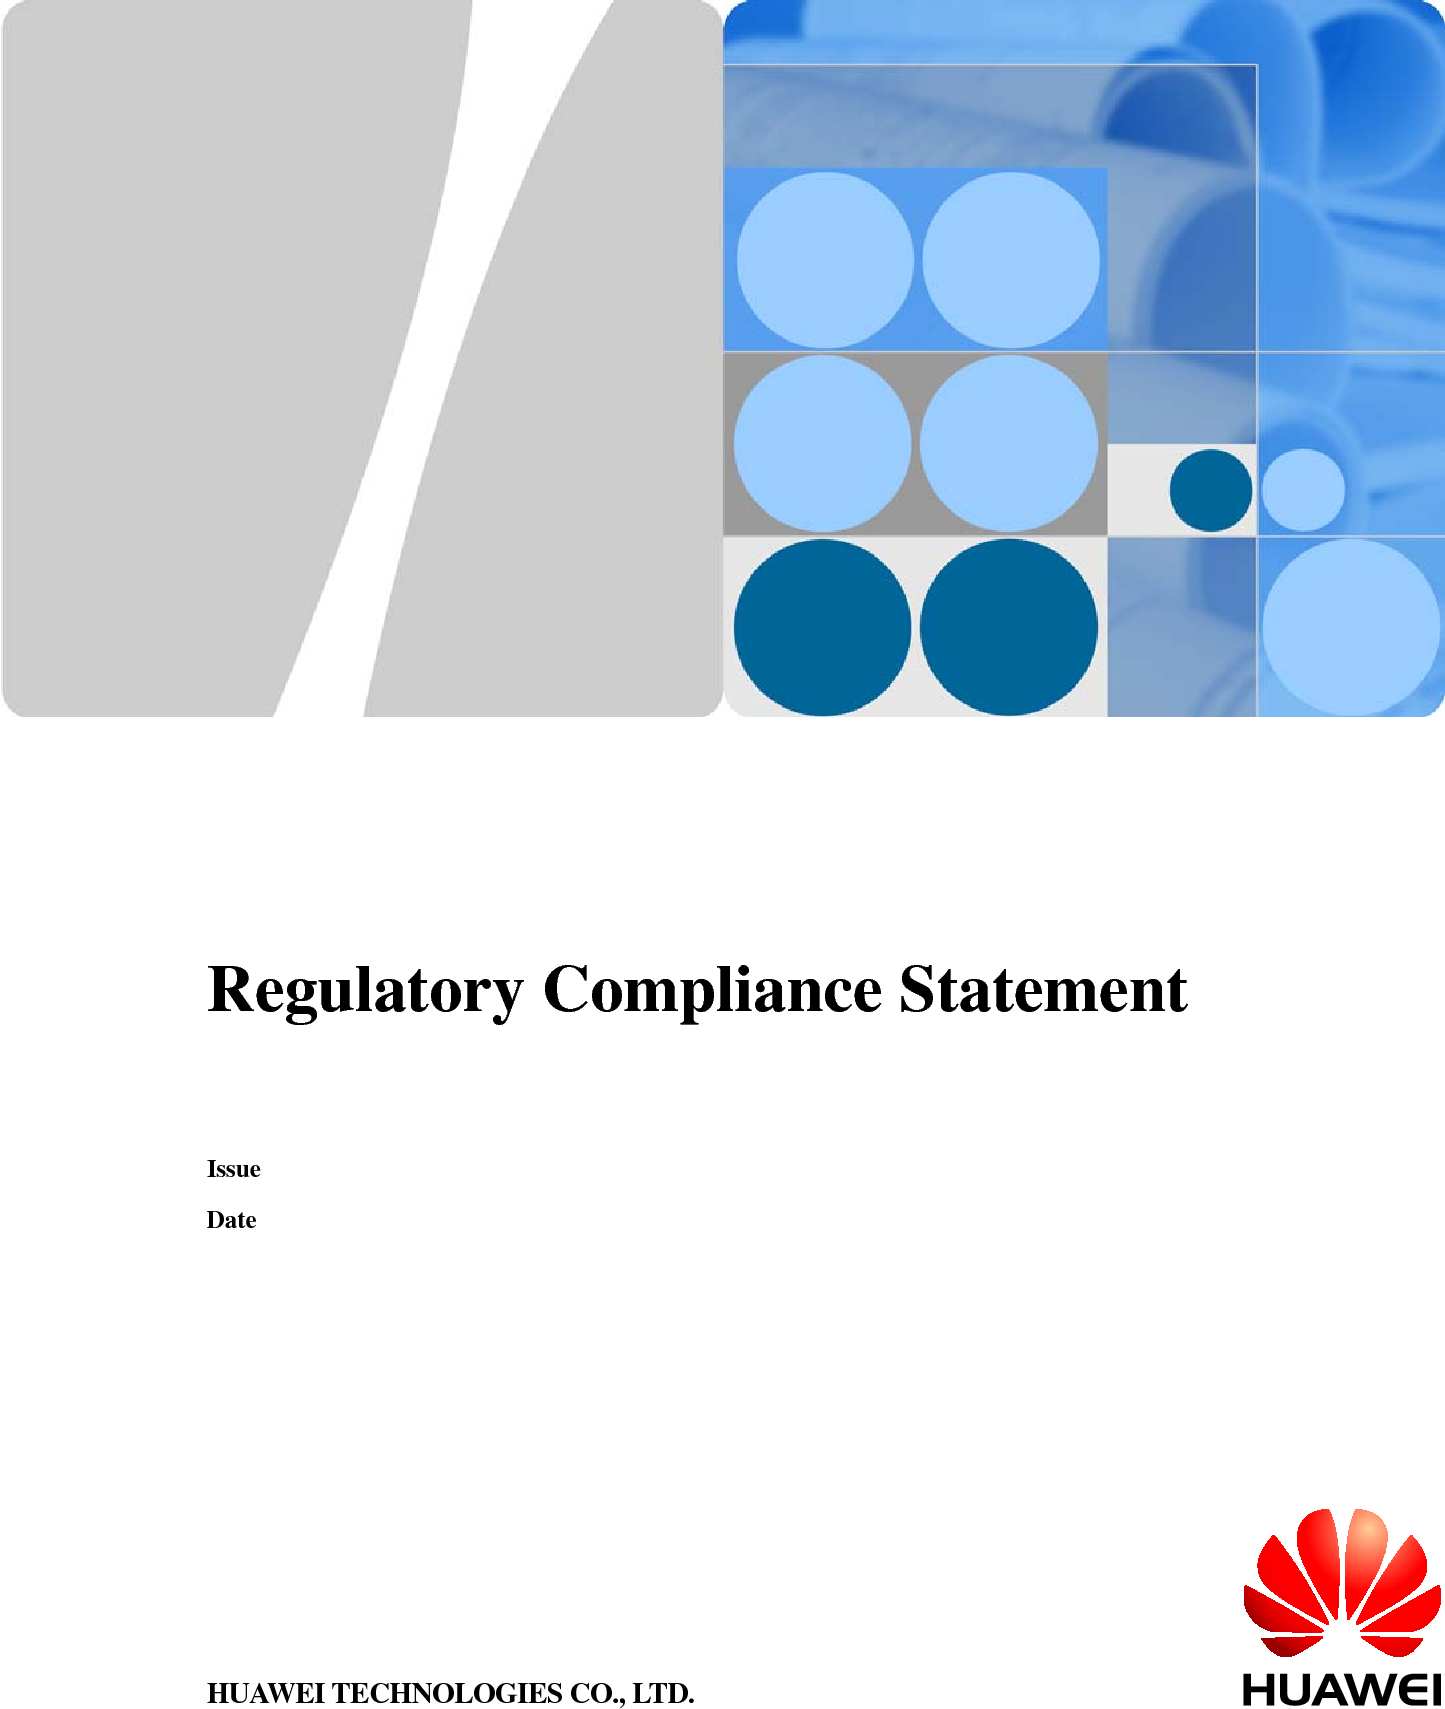           Regulatory Compliance Statement  Issue   Date   HUAWEI TECHNOLOGIES CO., LTD. 